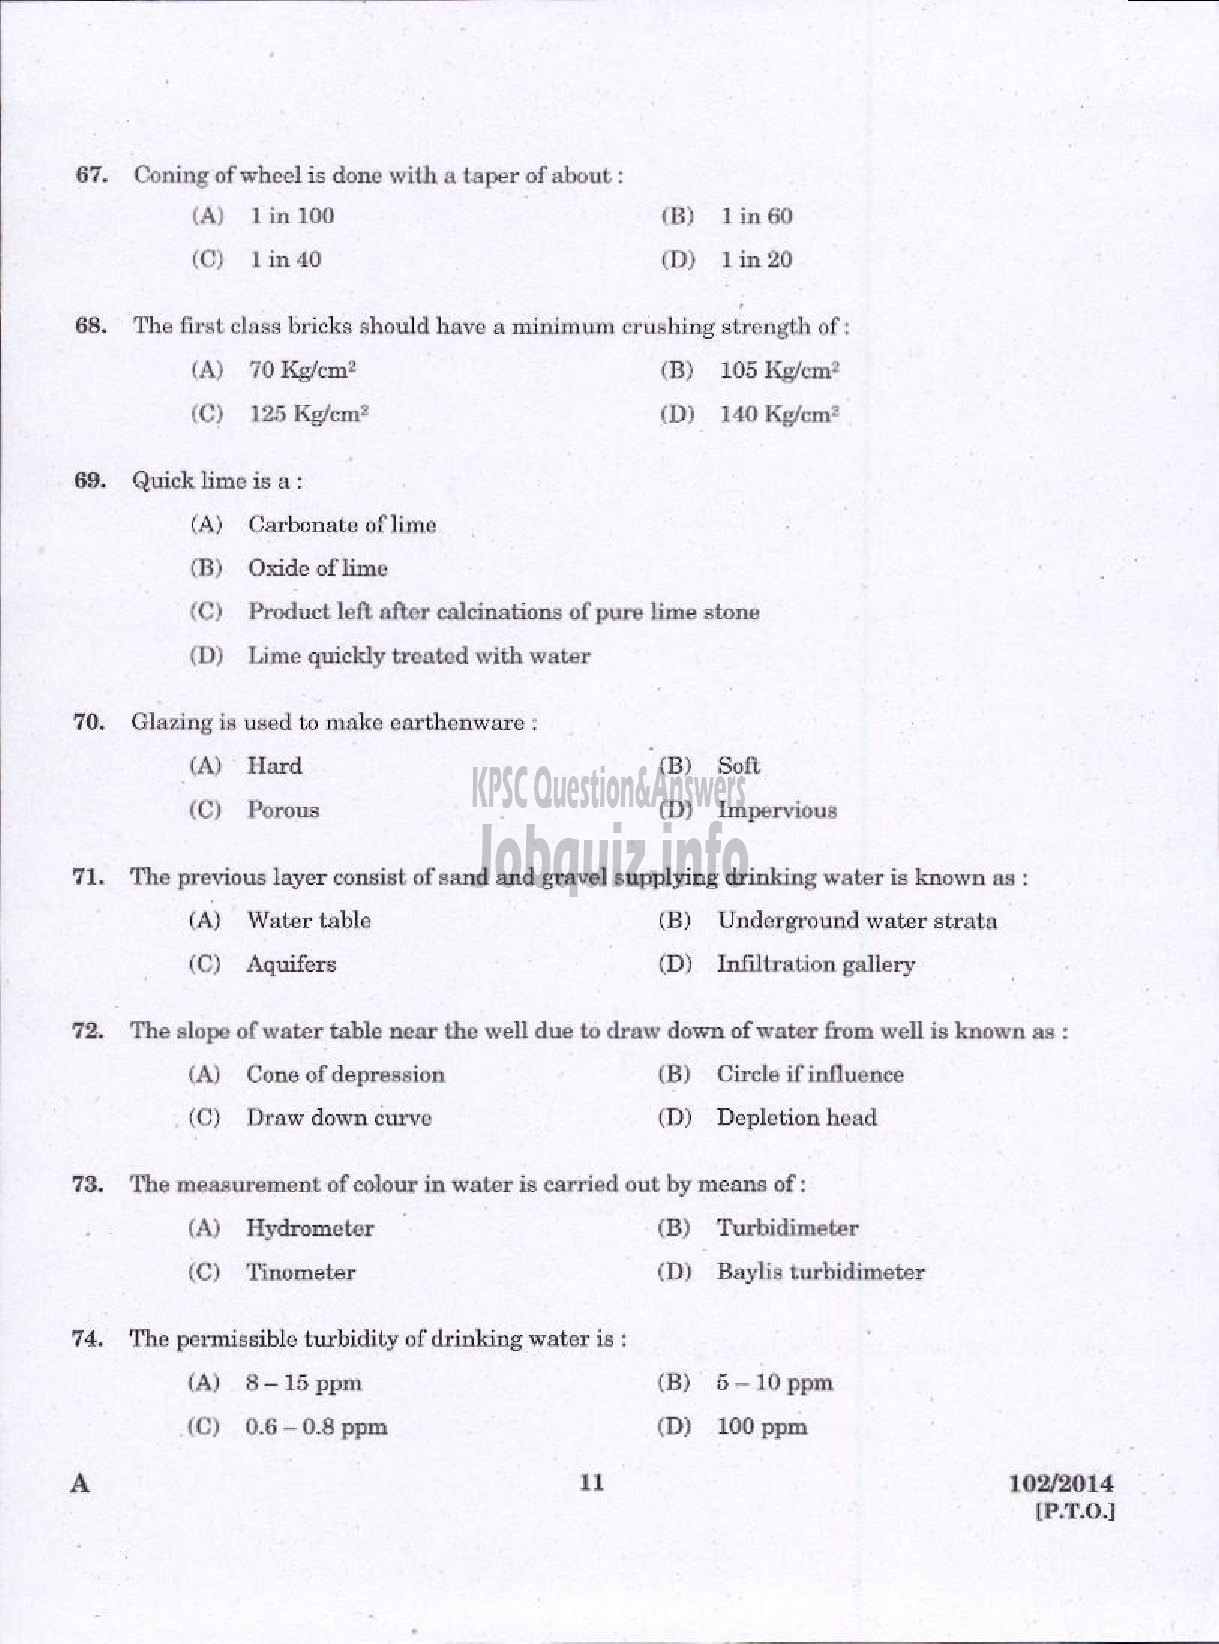 Kerala PSC Question Paper - III GRADE OVERSEER CIVIL SR FOR SC ST IRRIGATION AND II GRADE OVERSEER TRACER PUBLIC WORKS IRRIGATION-9